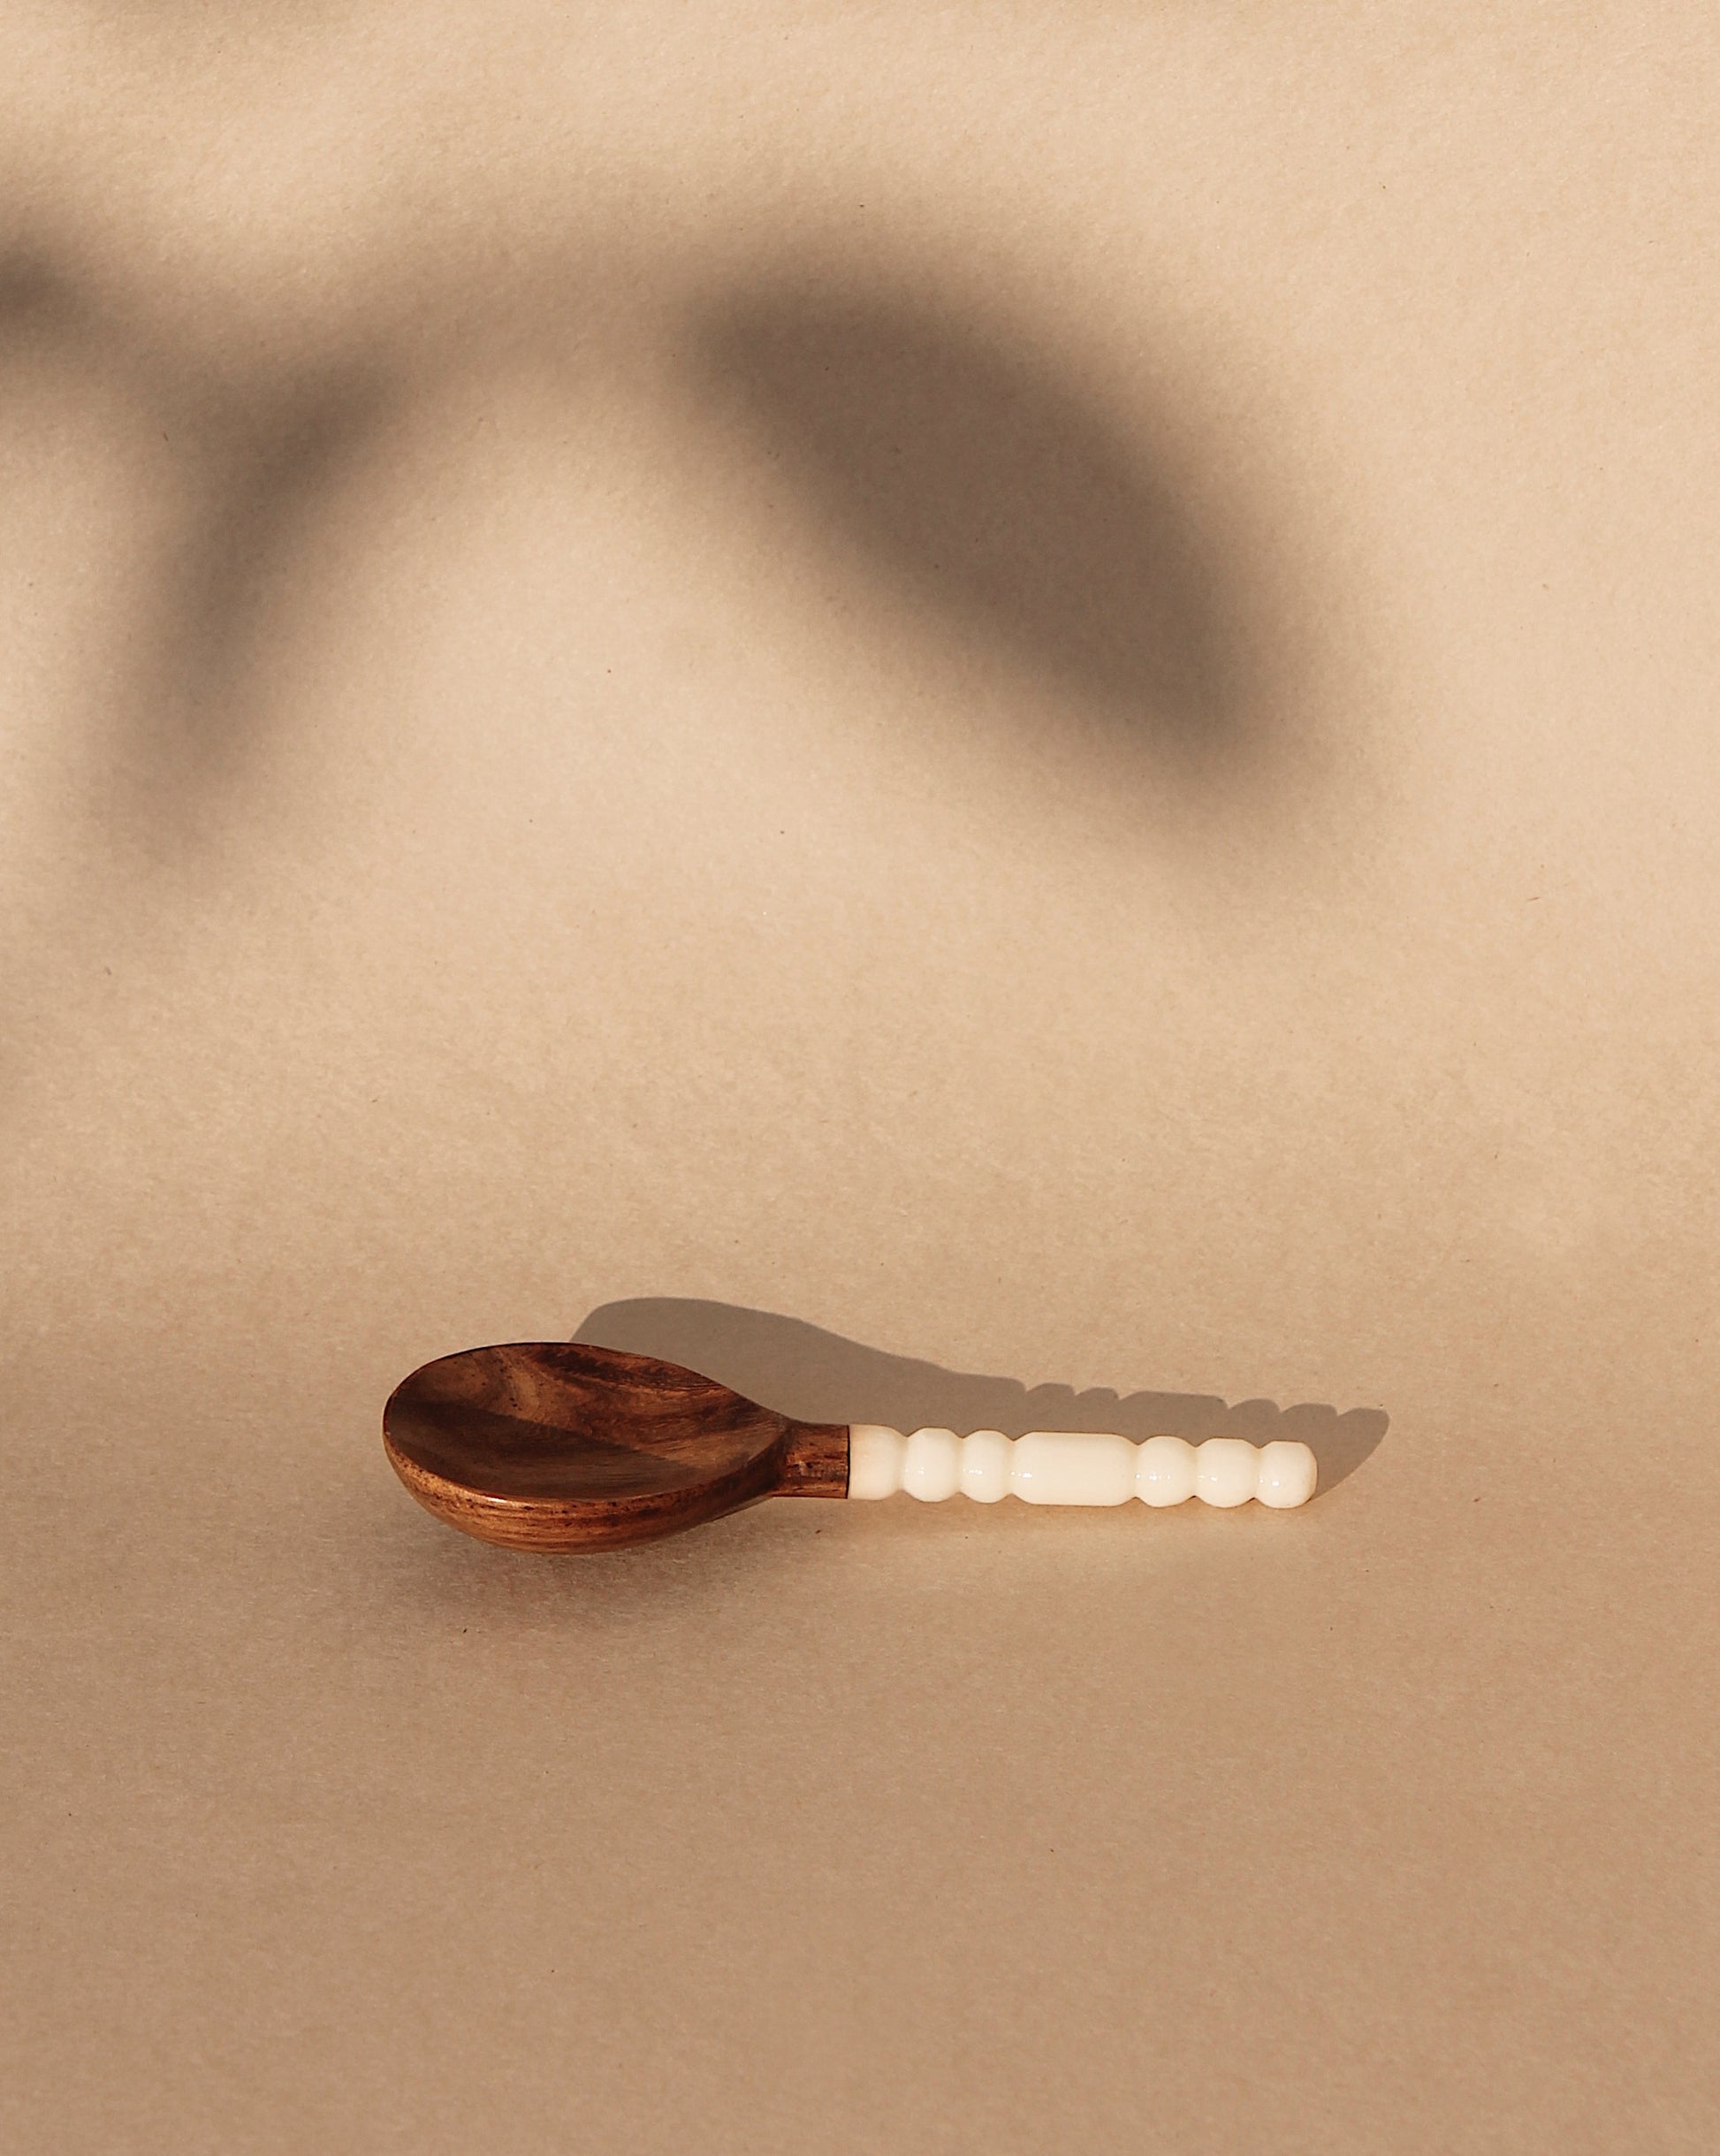 Masala Spoon with white tint